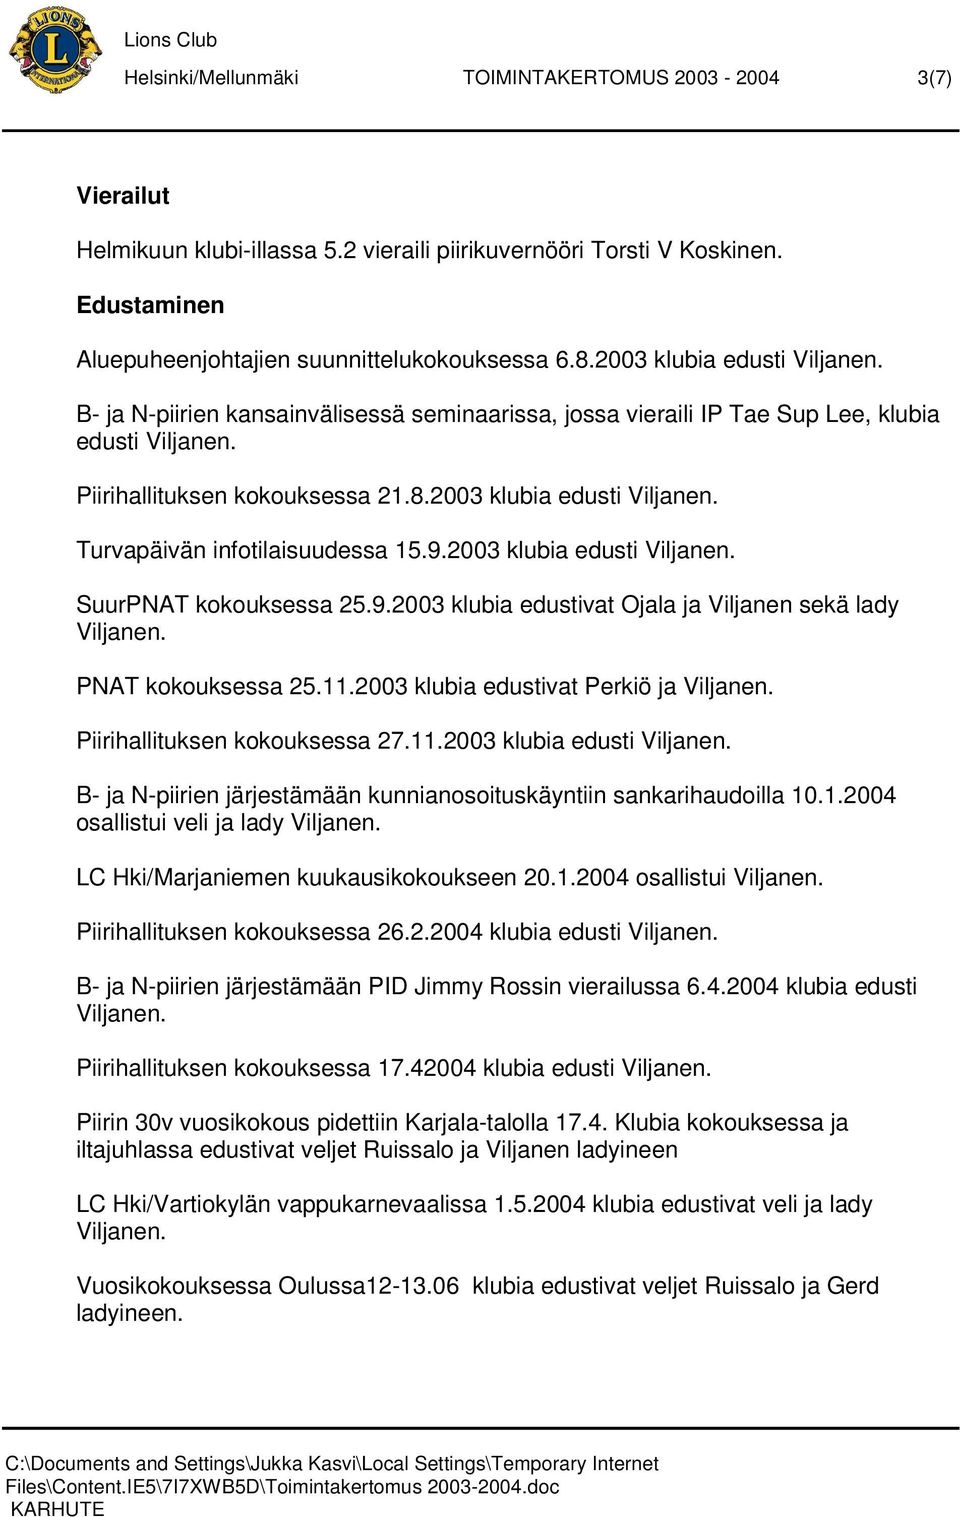 9.2003 klubia edusti Viljanen. SuurPNAT kokouksessa 25.9.2003 klubia edustivat Ojala ja Viljanen sekä lady Viljanen. PNAT kokouksessa 25.11.2003 klubia edustivat Perkiö ja Viljanen.